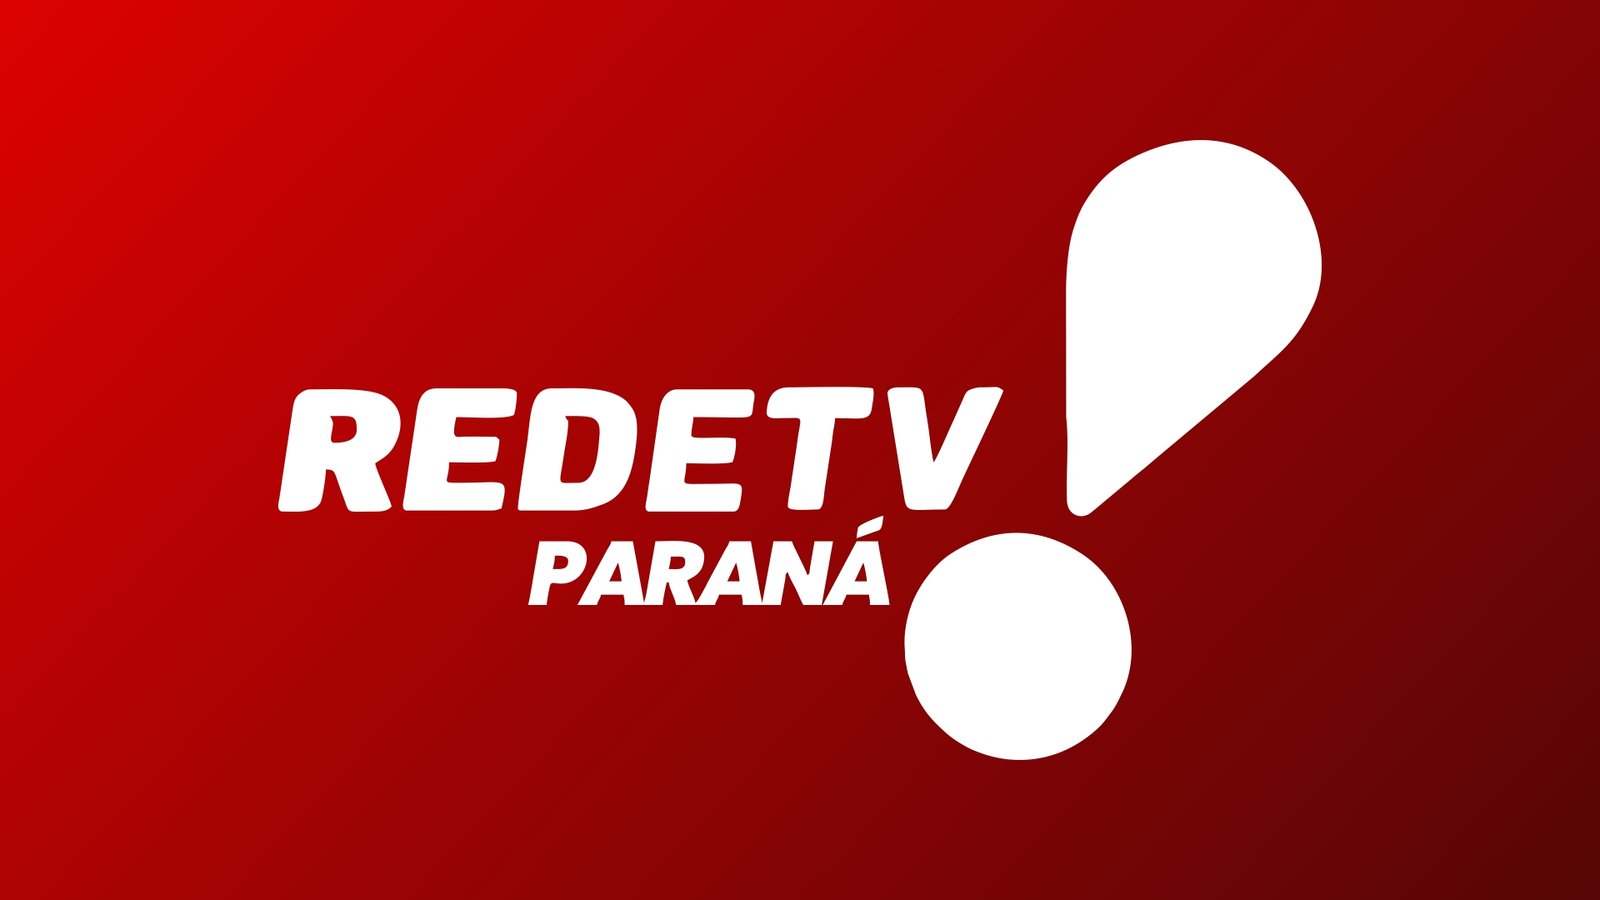 REDETV! PARANÁ - CANAL 160